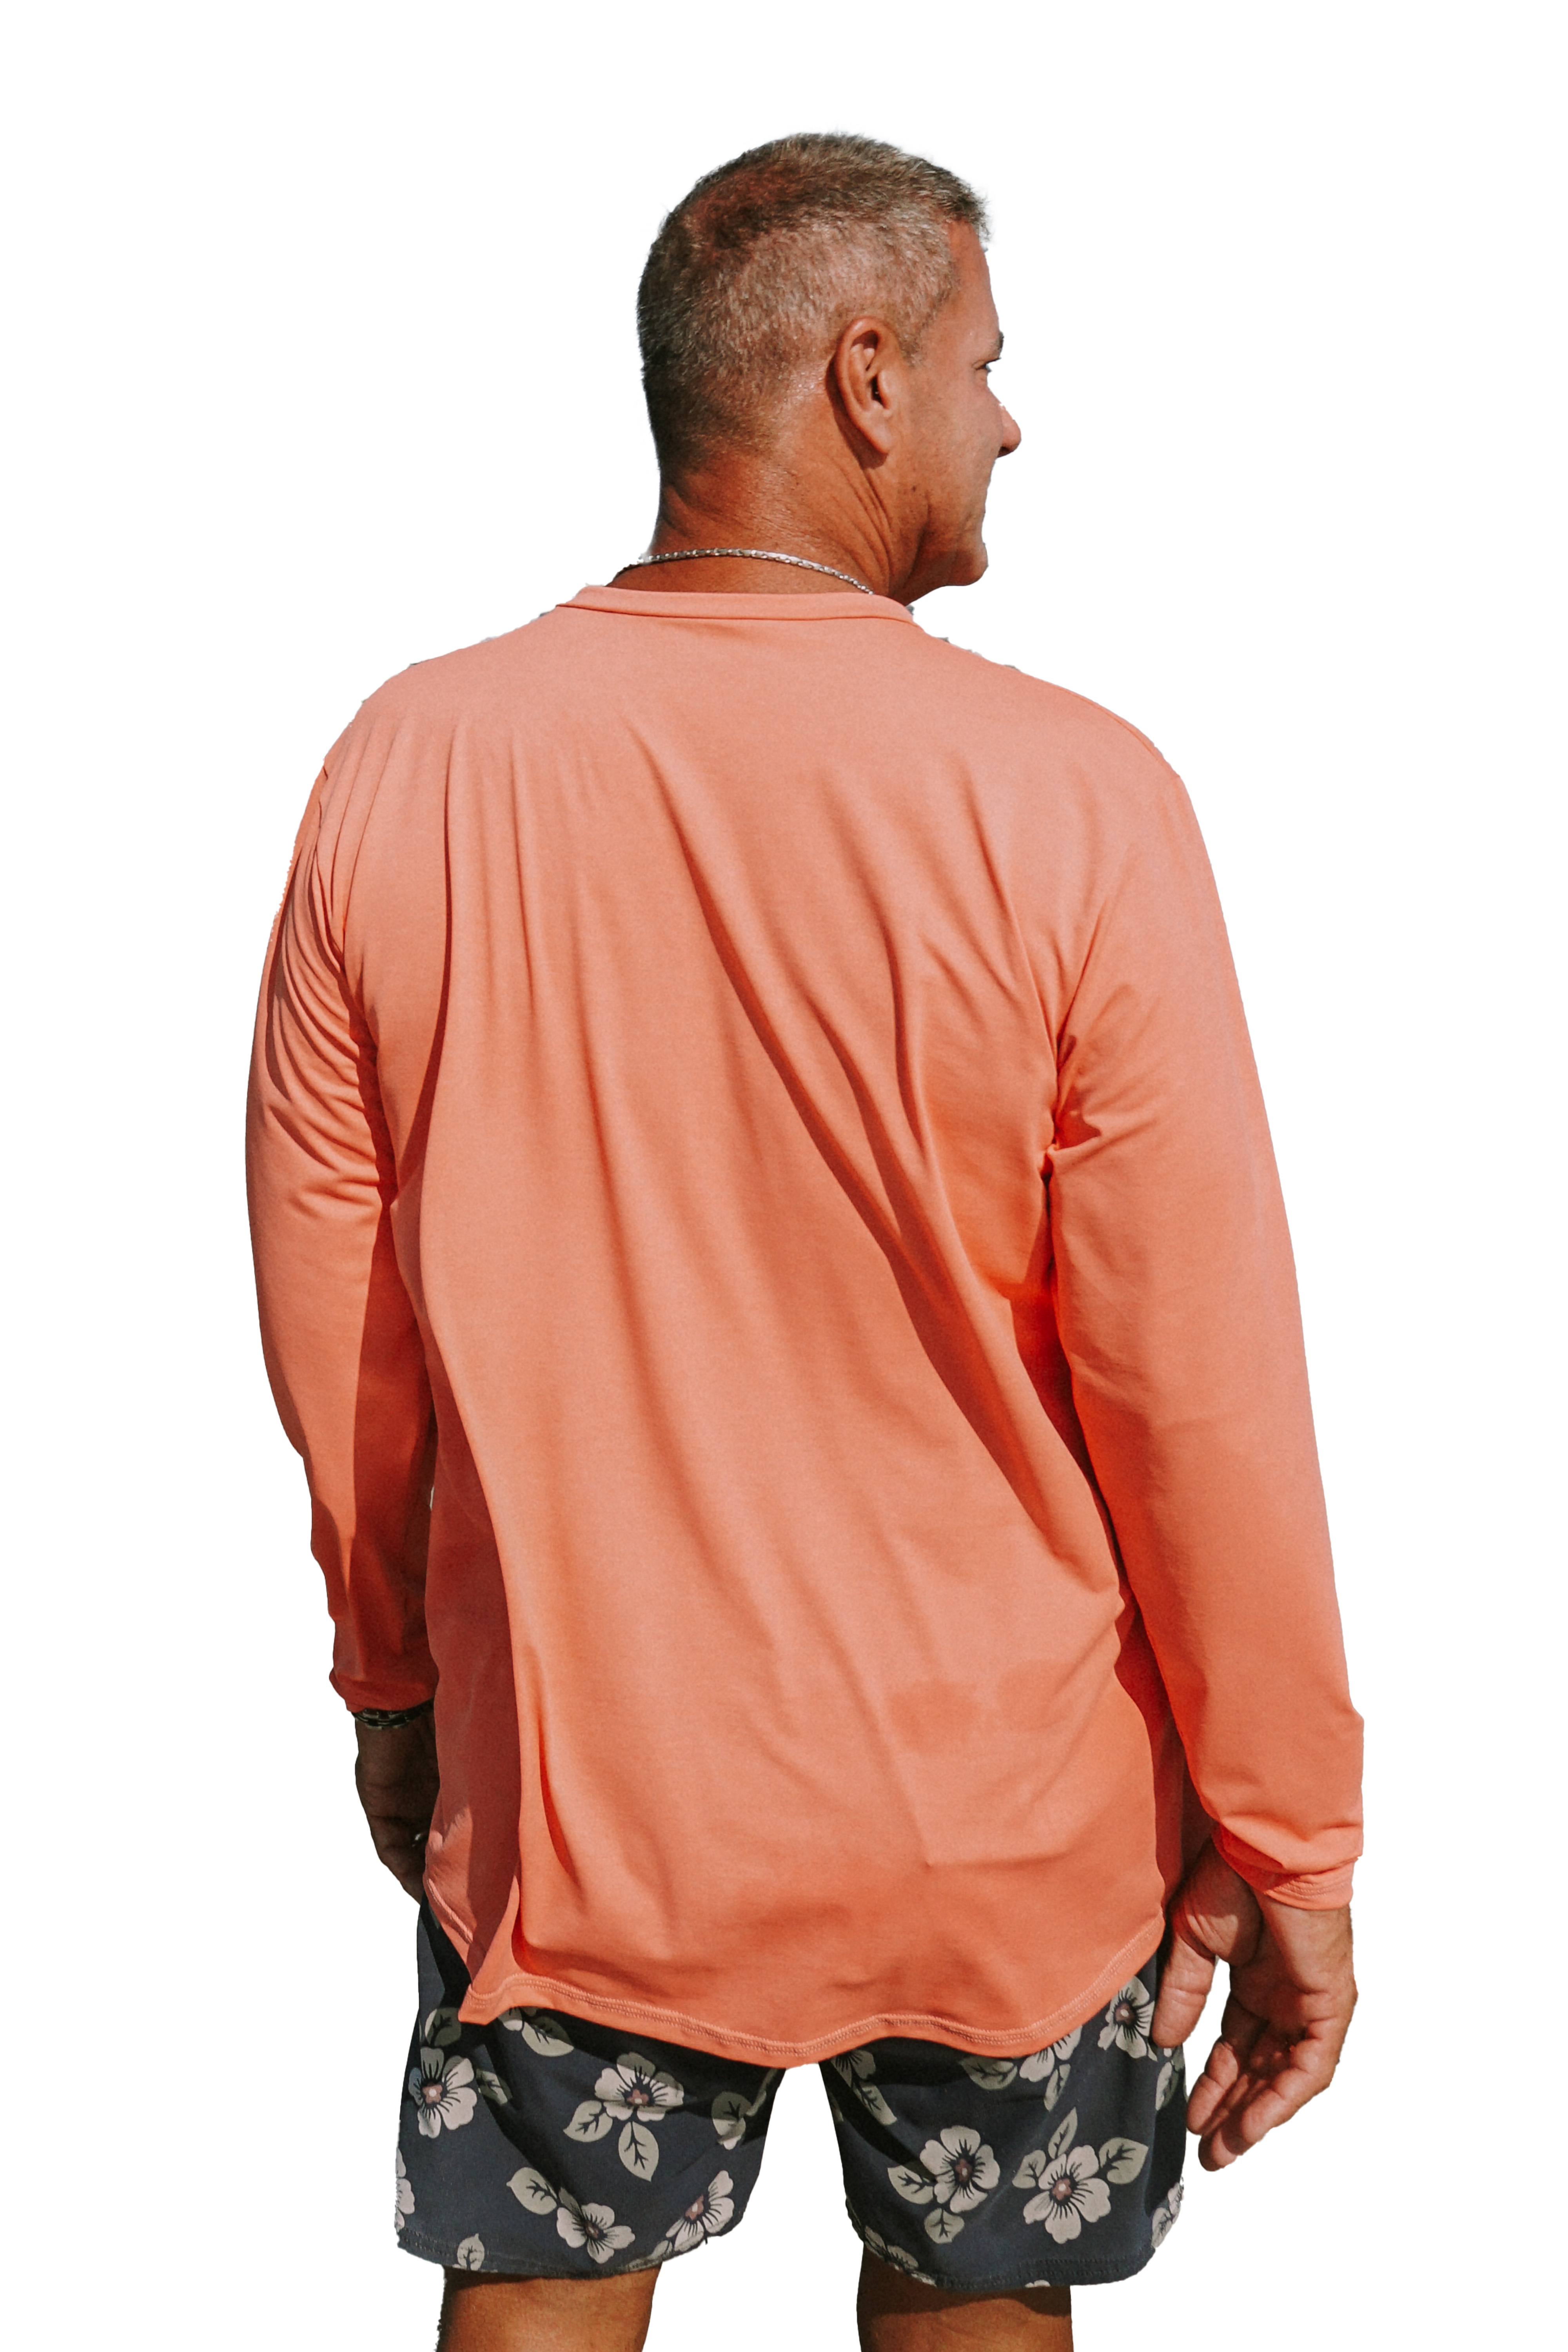 Mens Sun Shirt  UPF+ UV Protection Shirt Made in USA